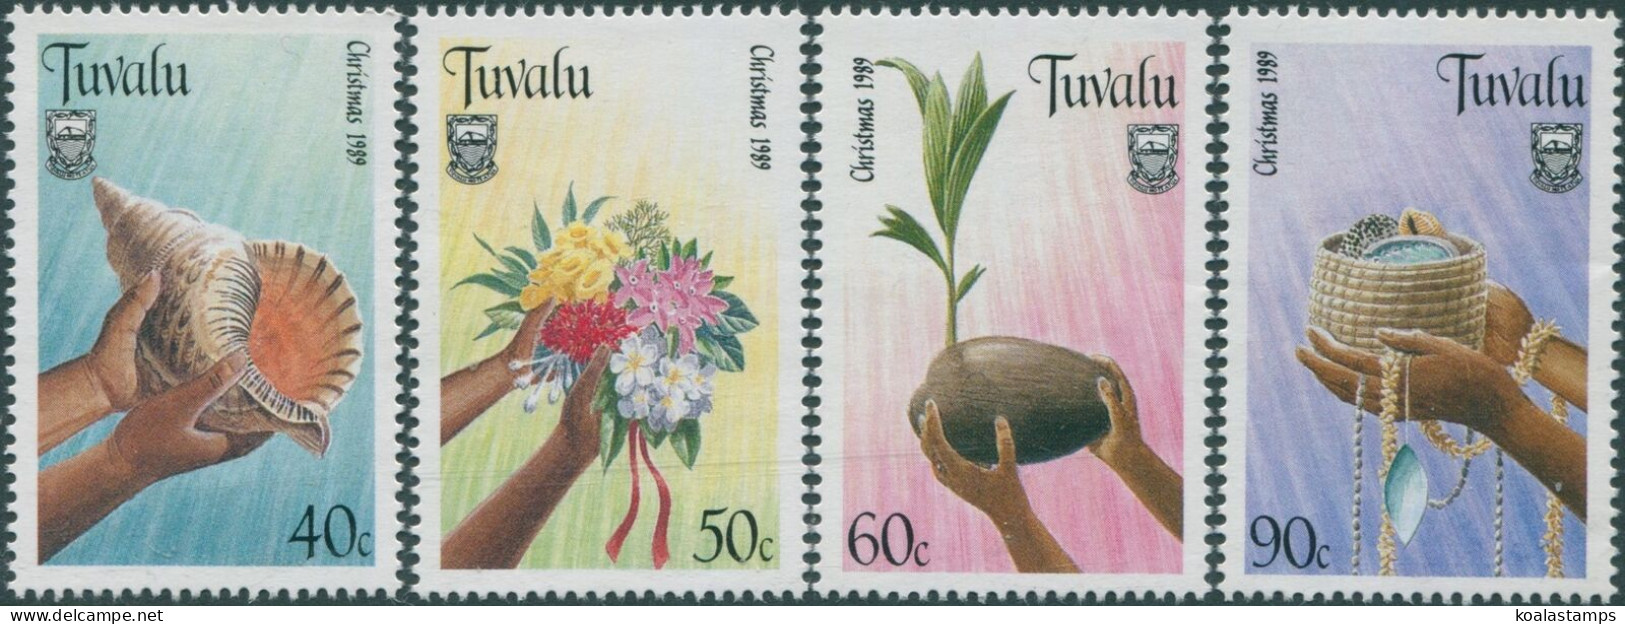 Tuvalu 1989 SG564-567 Christmas Set MNH - Tuvalu